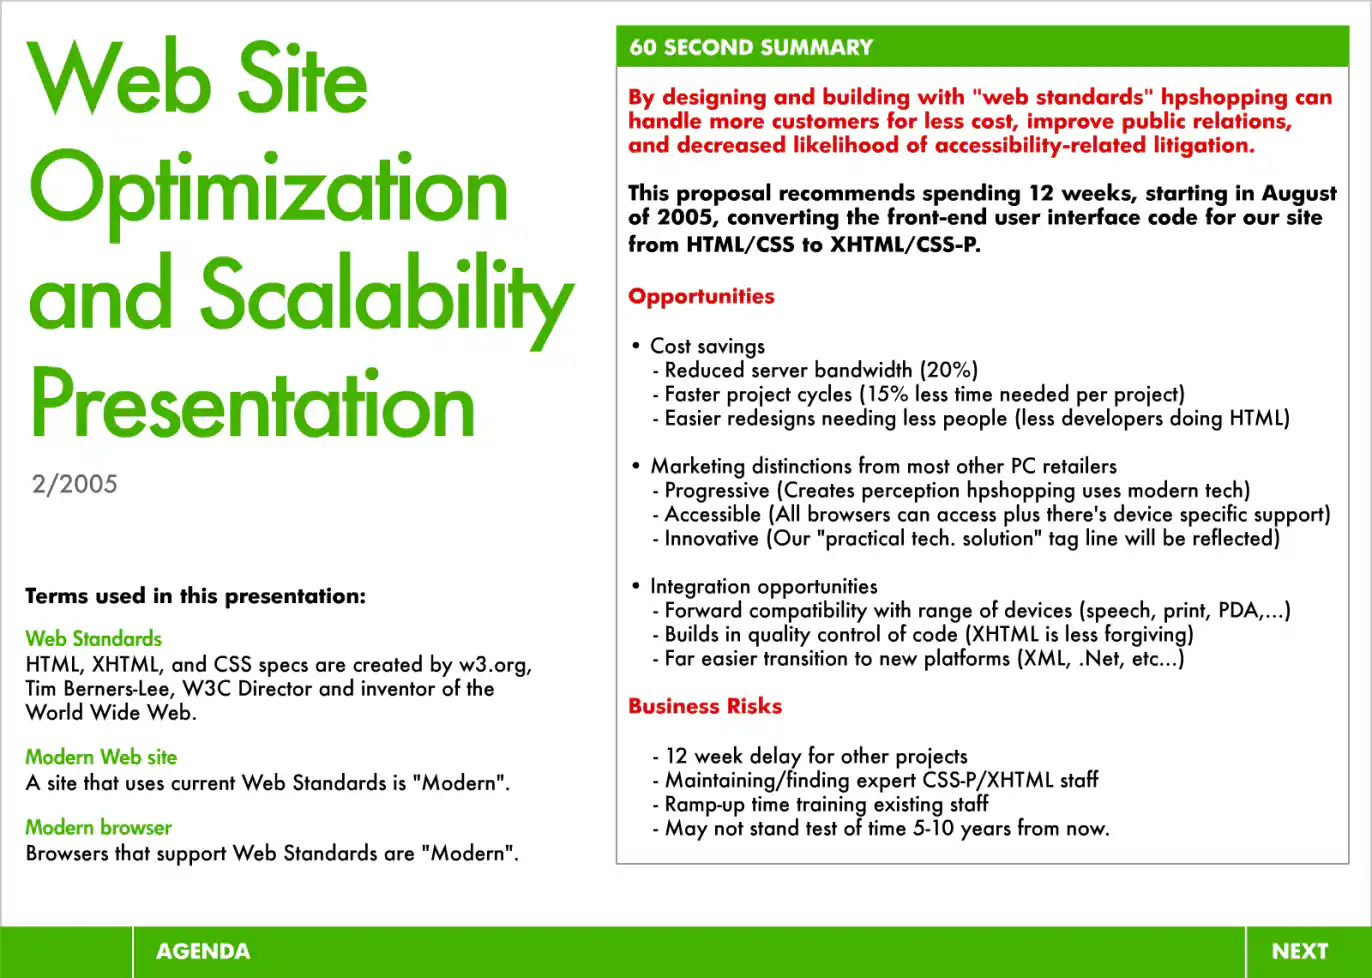 Slide 01: Website Optimization and Scalability Presentation